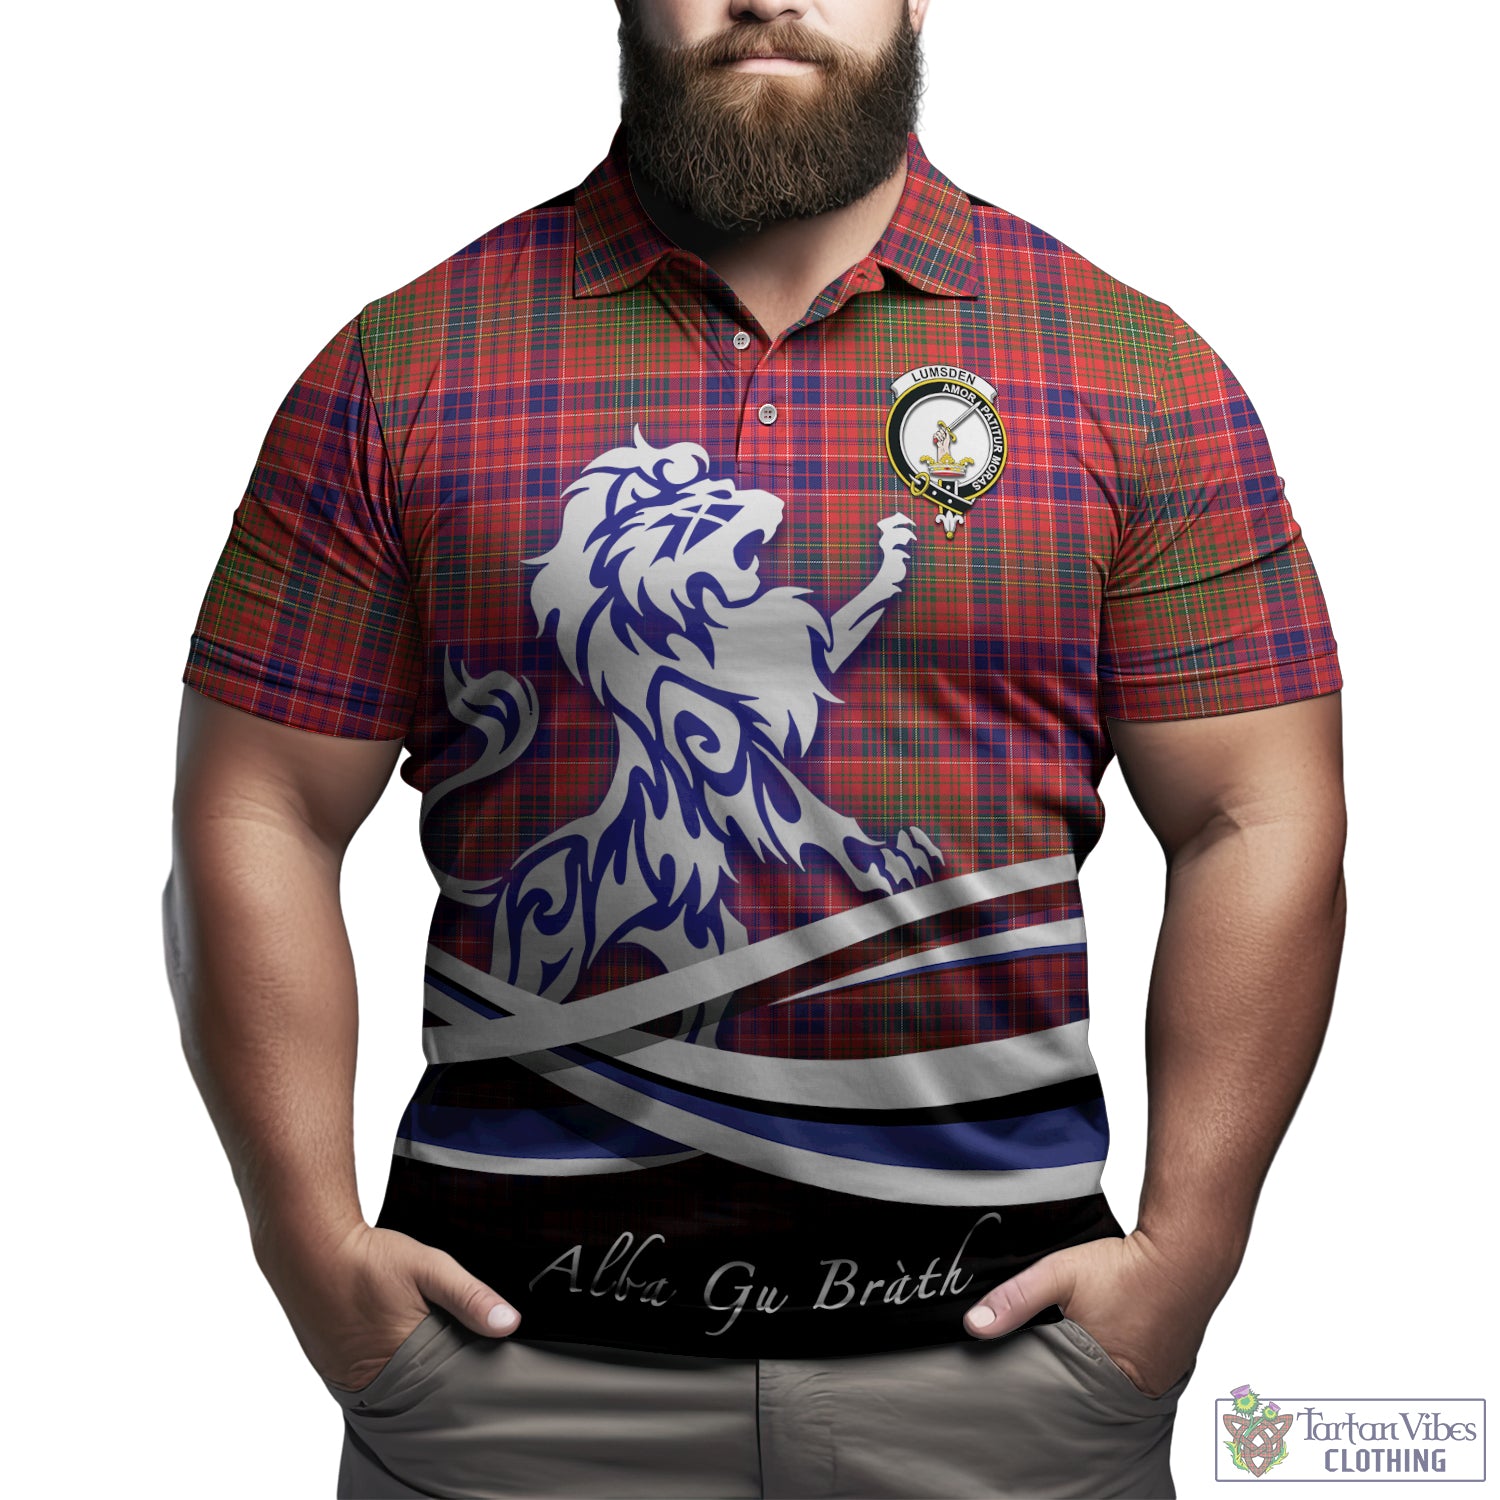 lumsden-modern-tartan-polo-shirt-with-alba-gu-brath-regal-lion-emblem